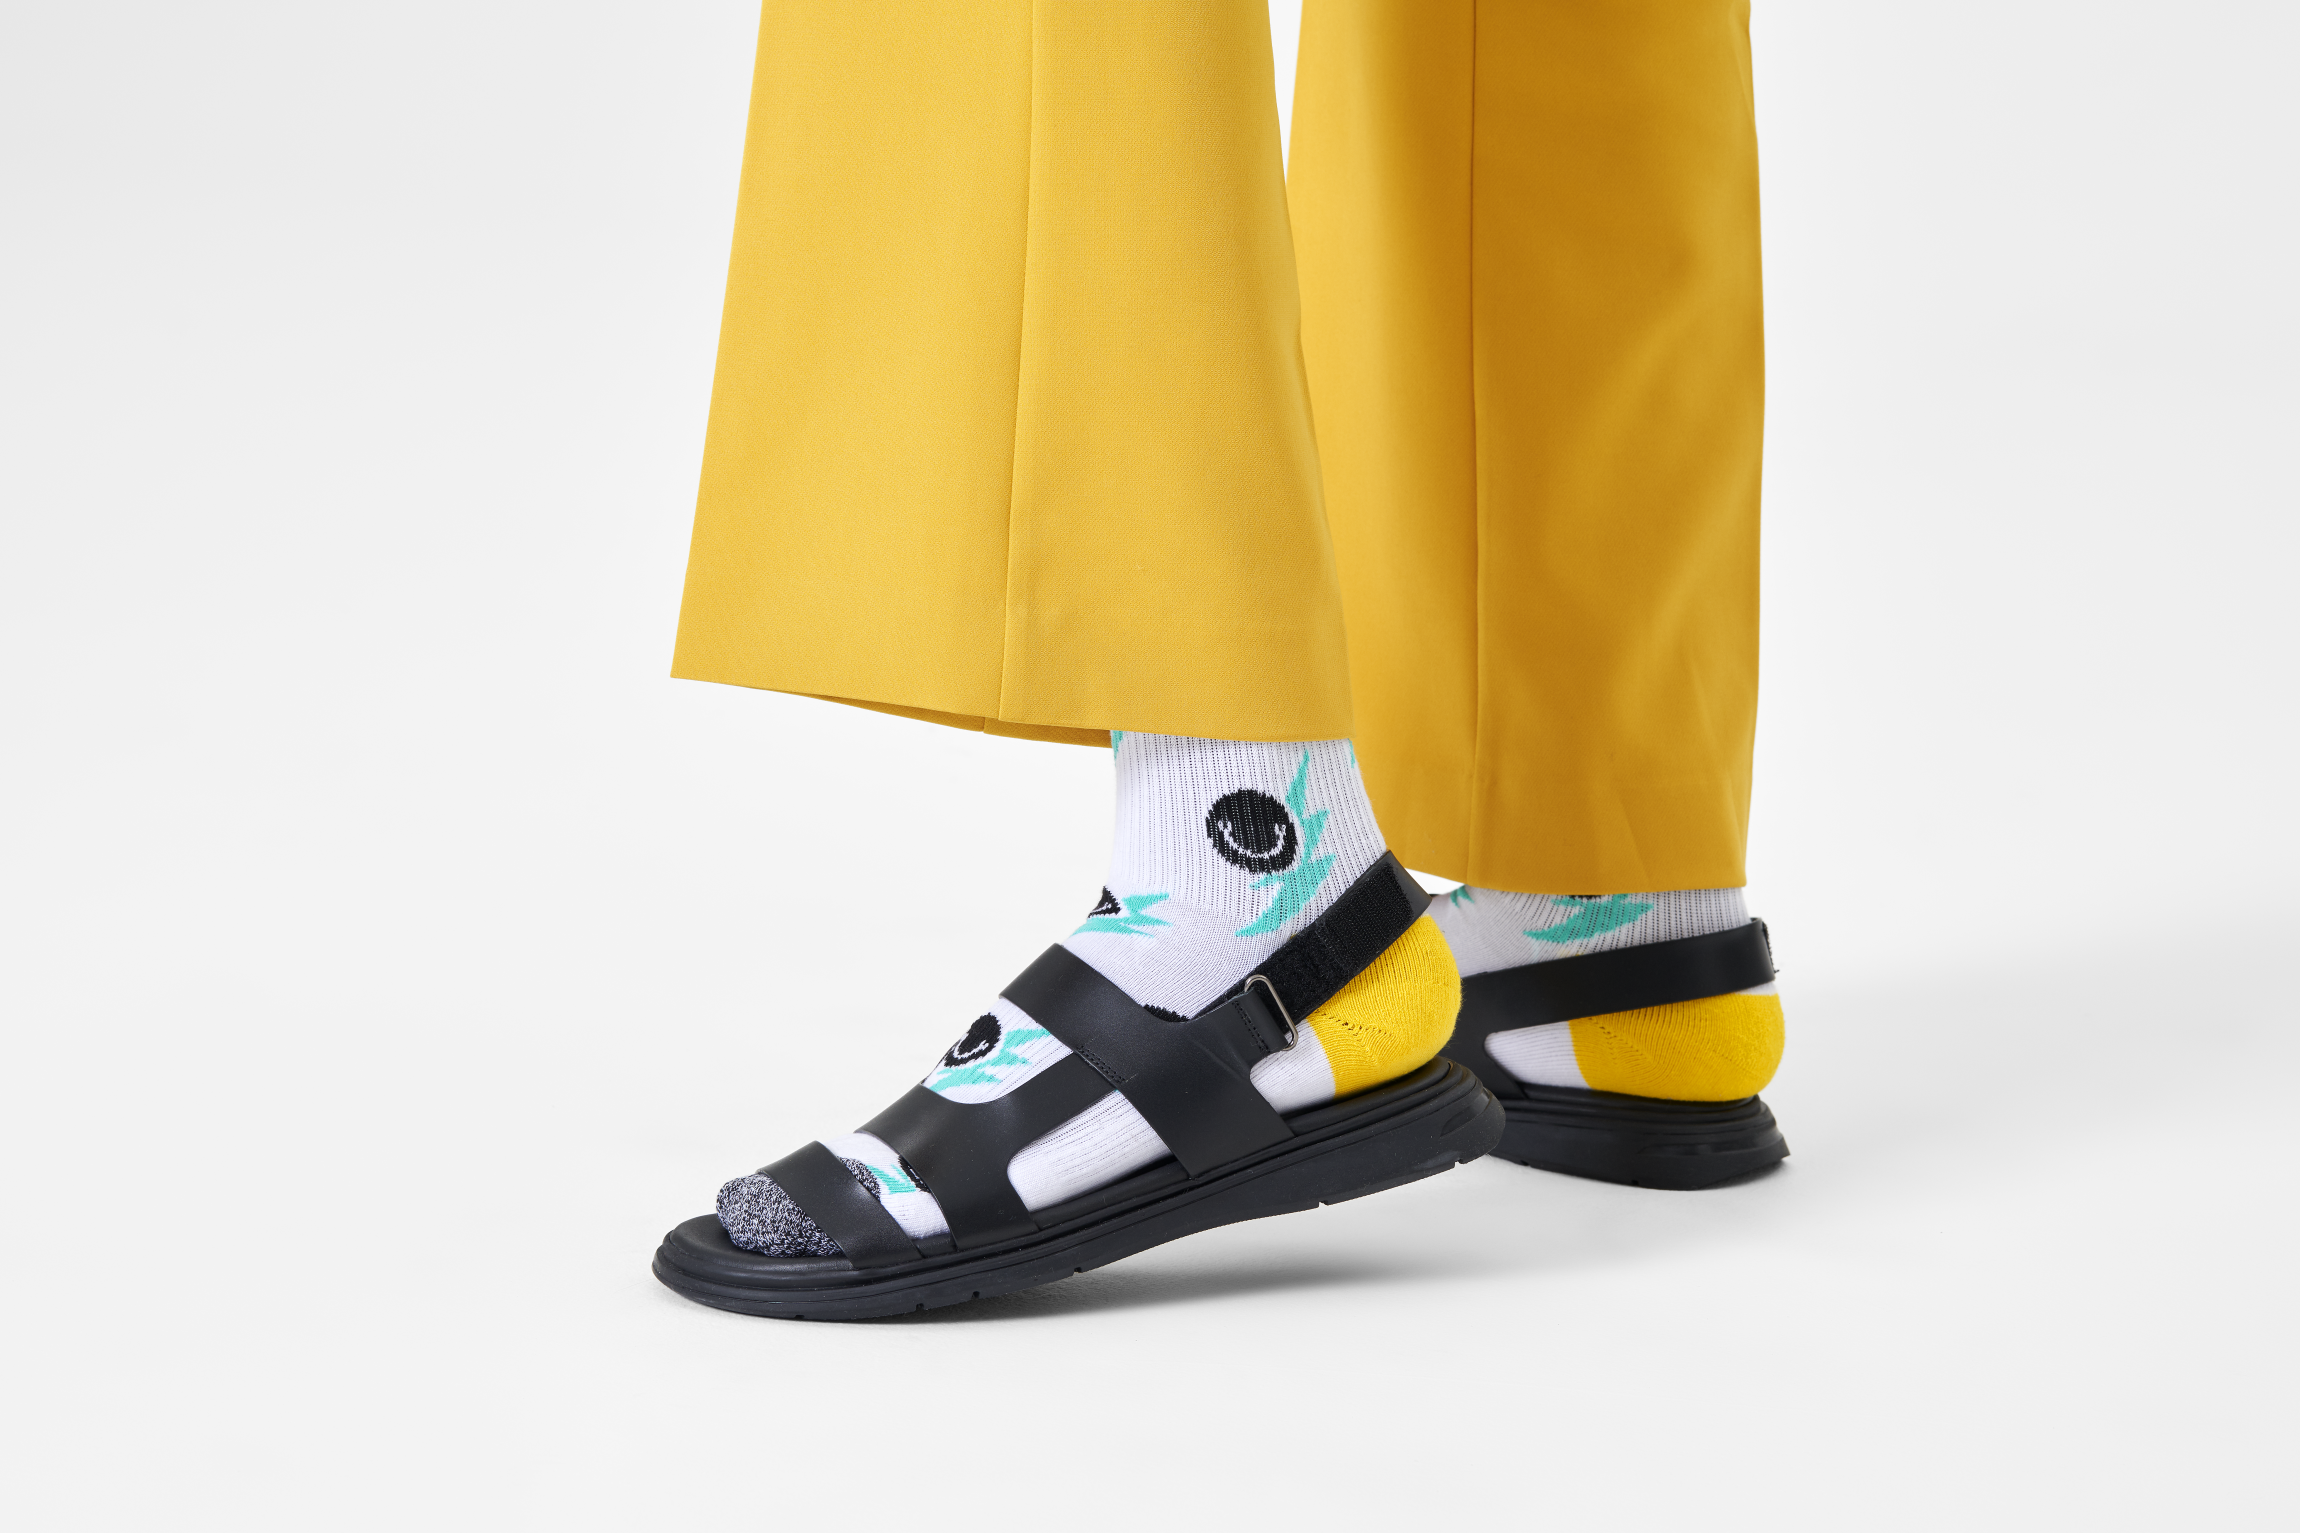 Biele ponožky Happy Socks, vzor Smile Flash // KOLEKCIA ATHLETIC